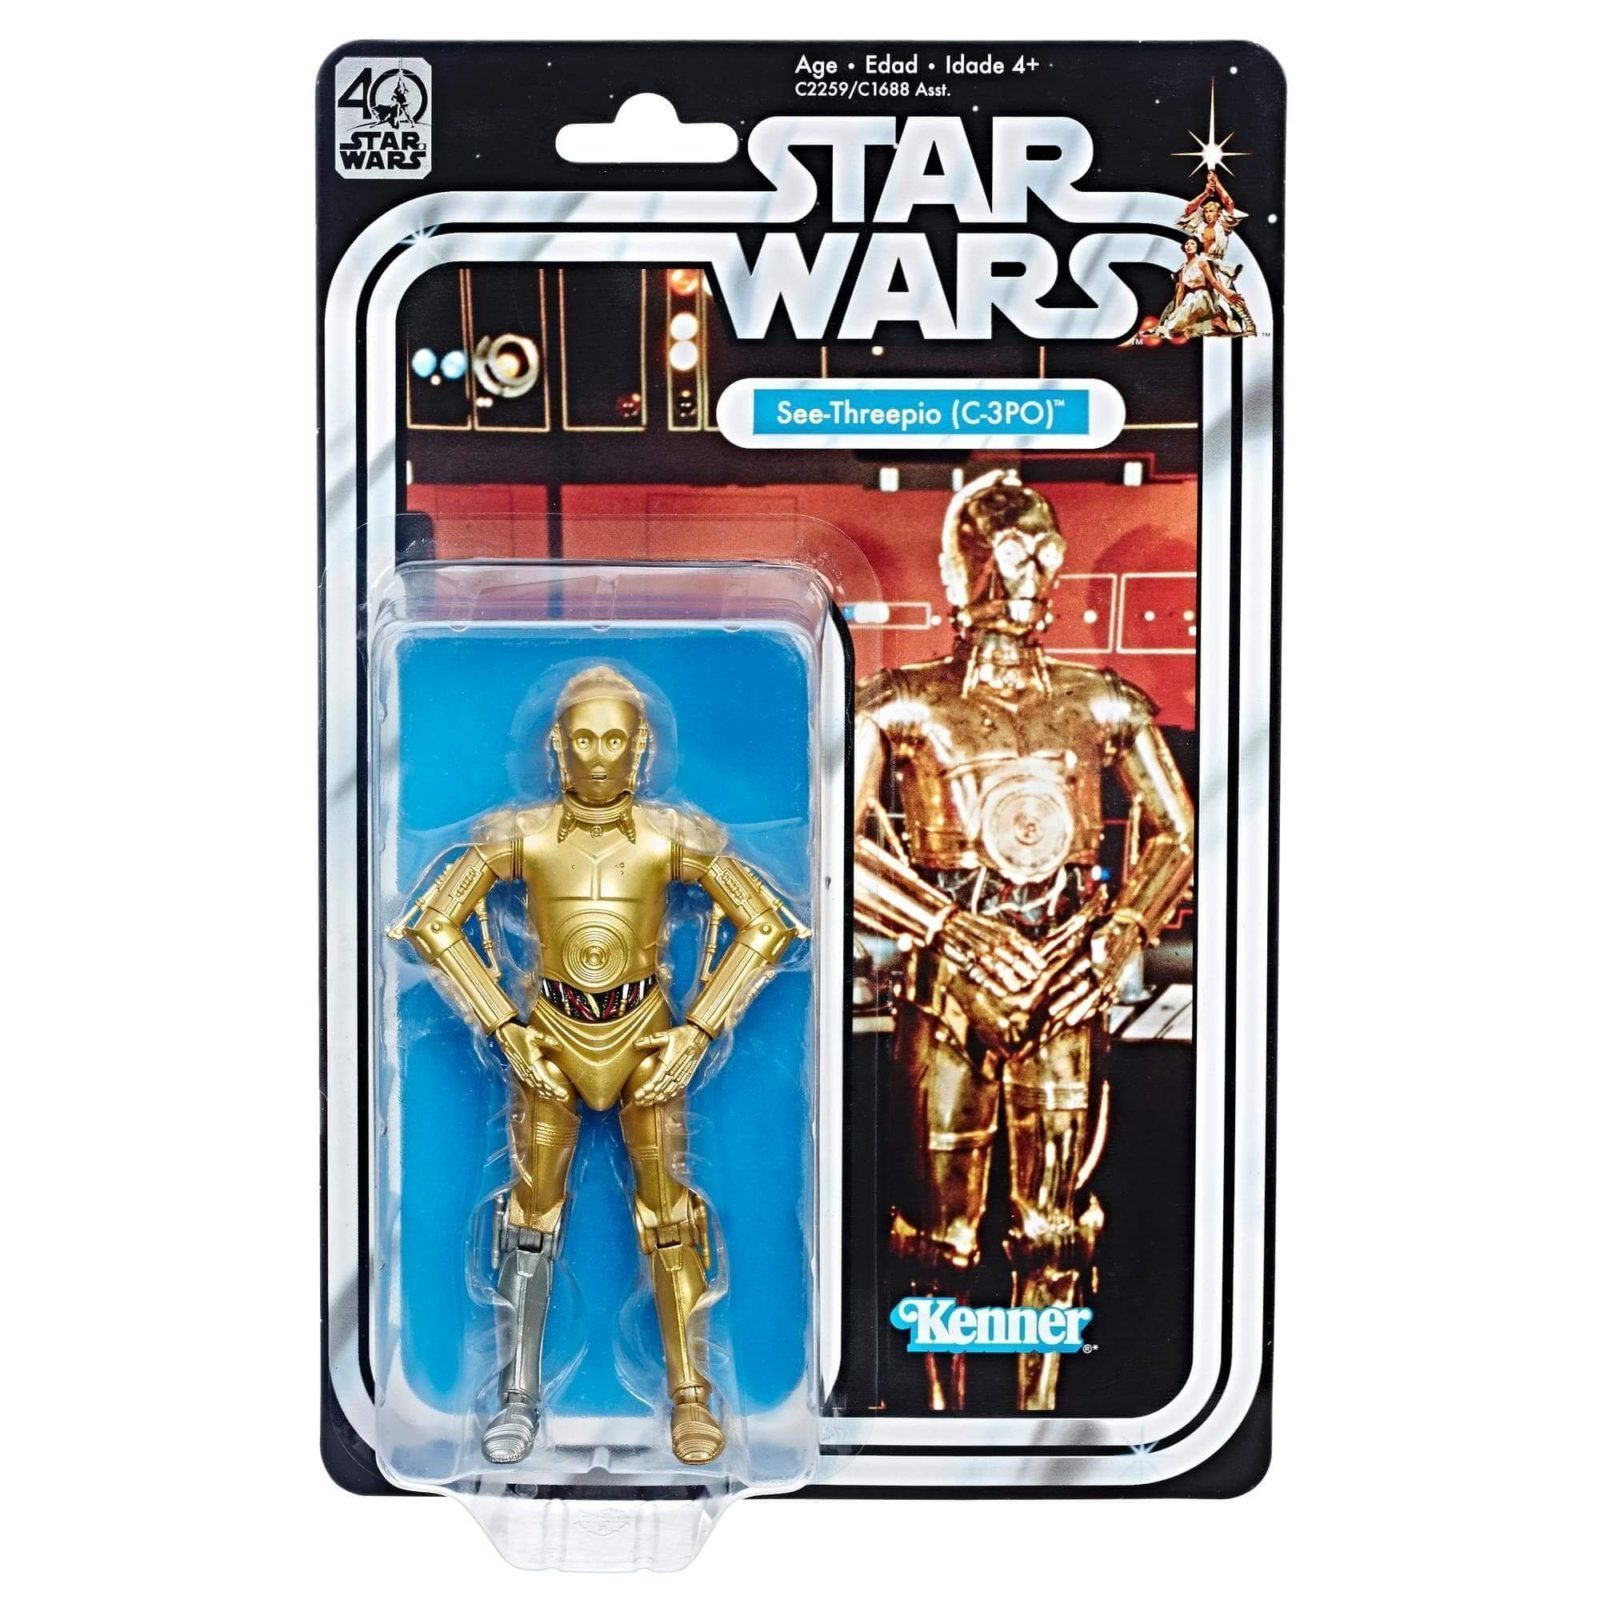 Star Wars The Black Series 40th Anniversary Action Figure See-Threepio C-3PO